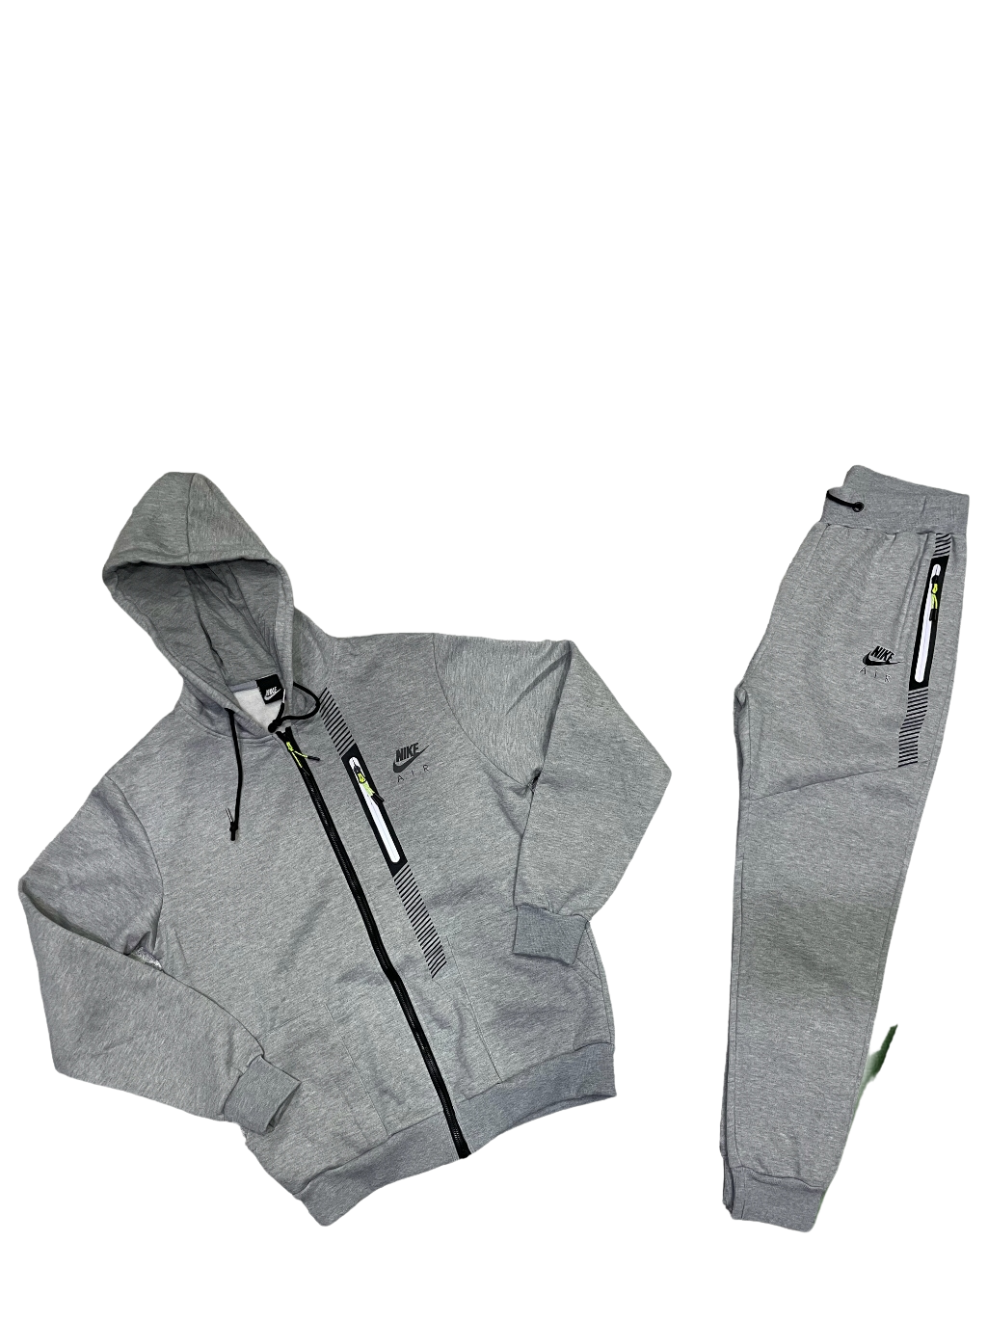 N370O Nike Conjunto de hombre pants completo gris claro negro